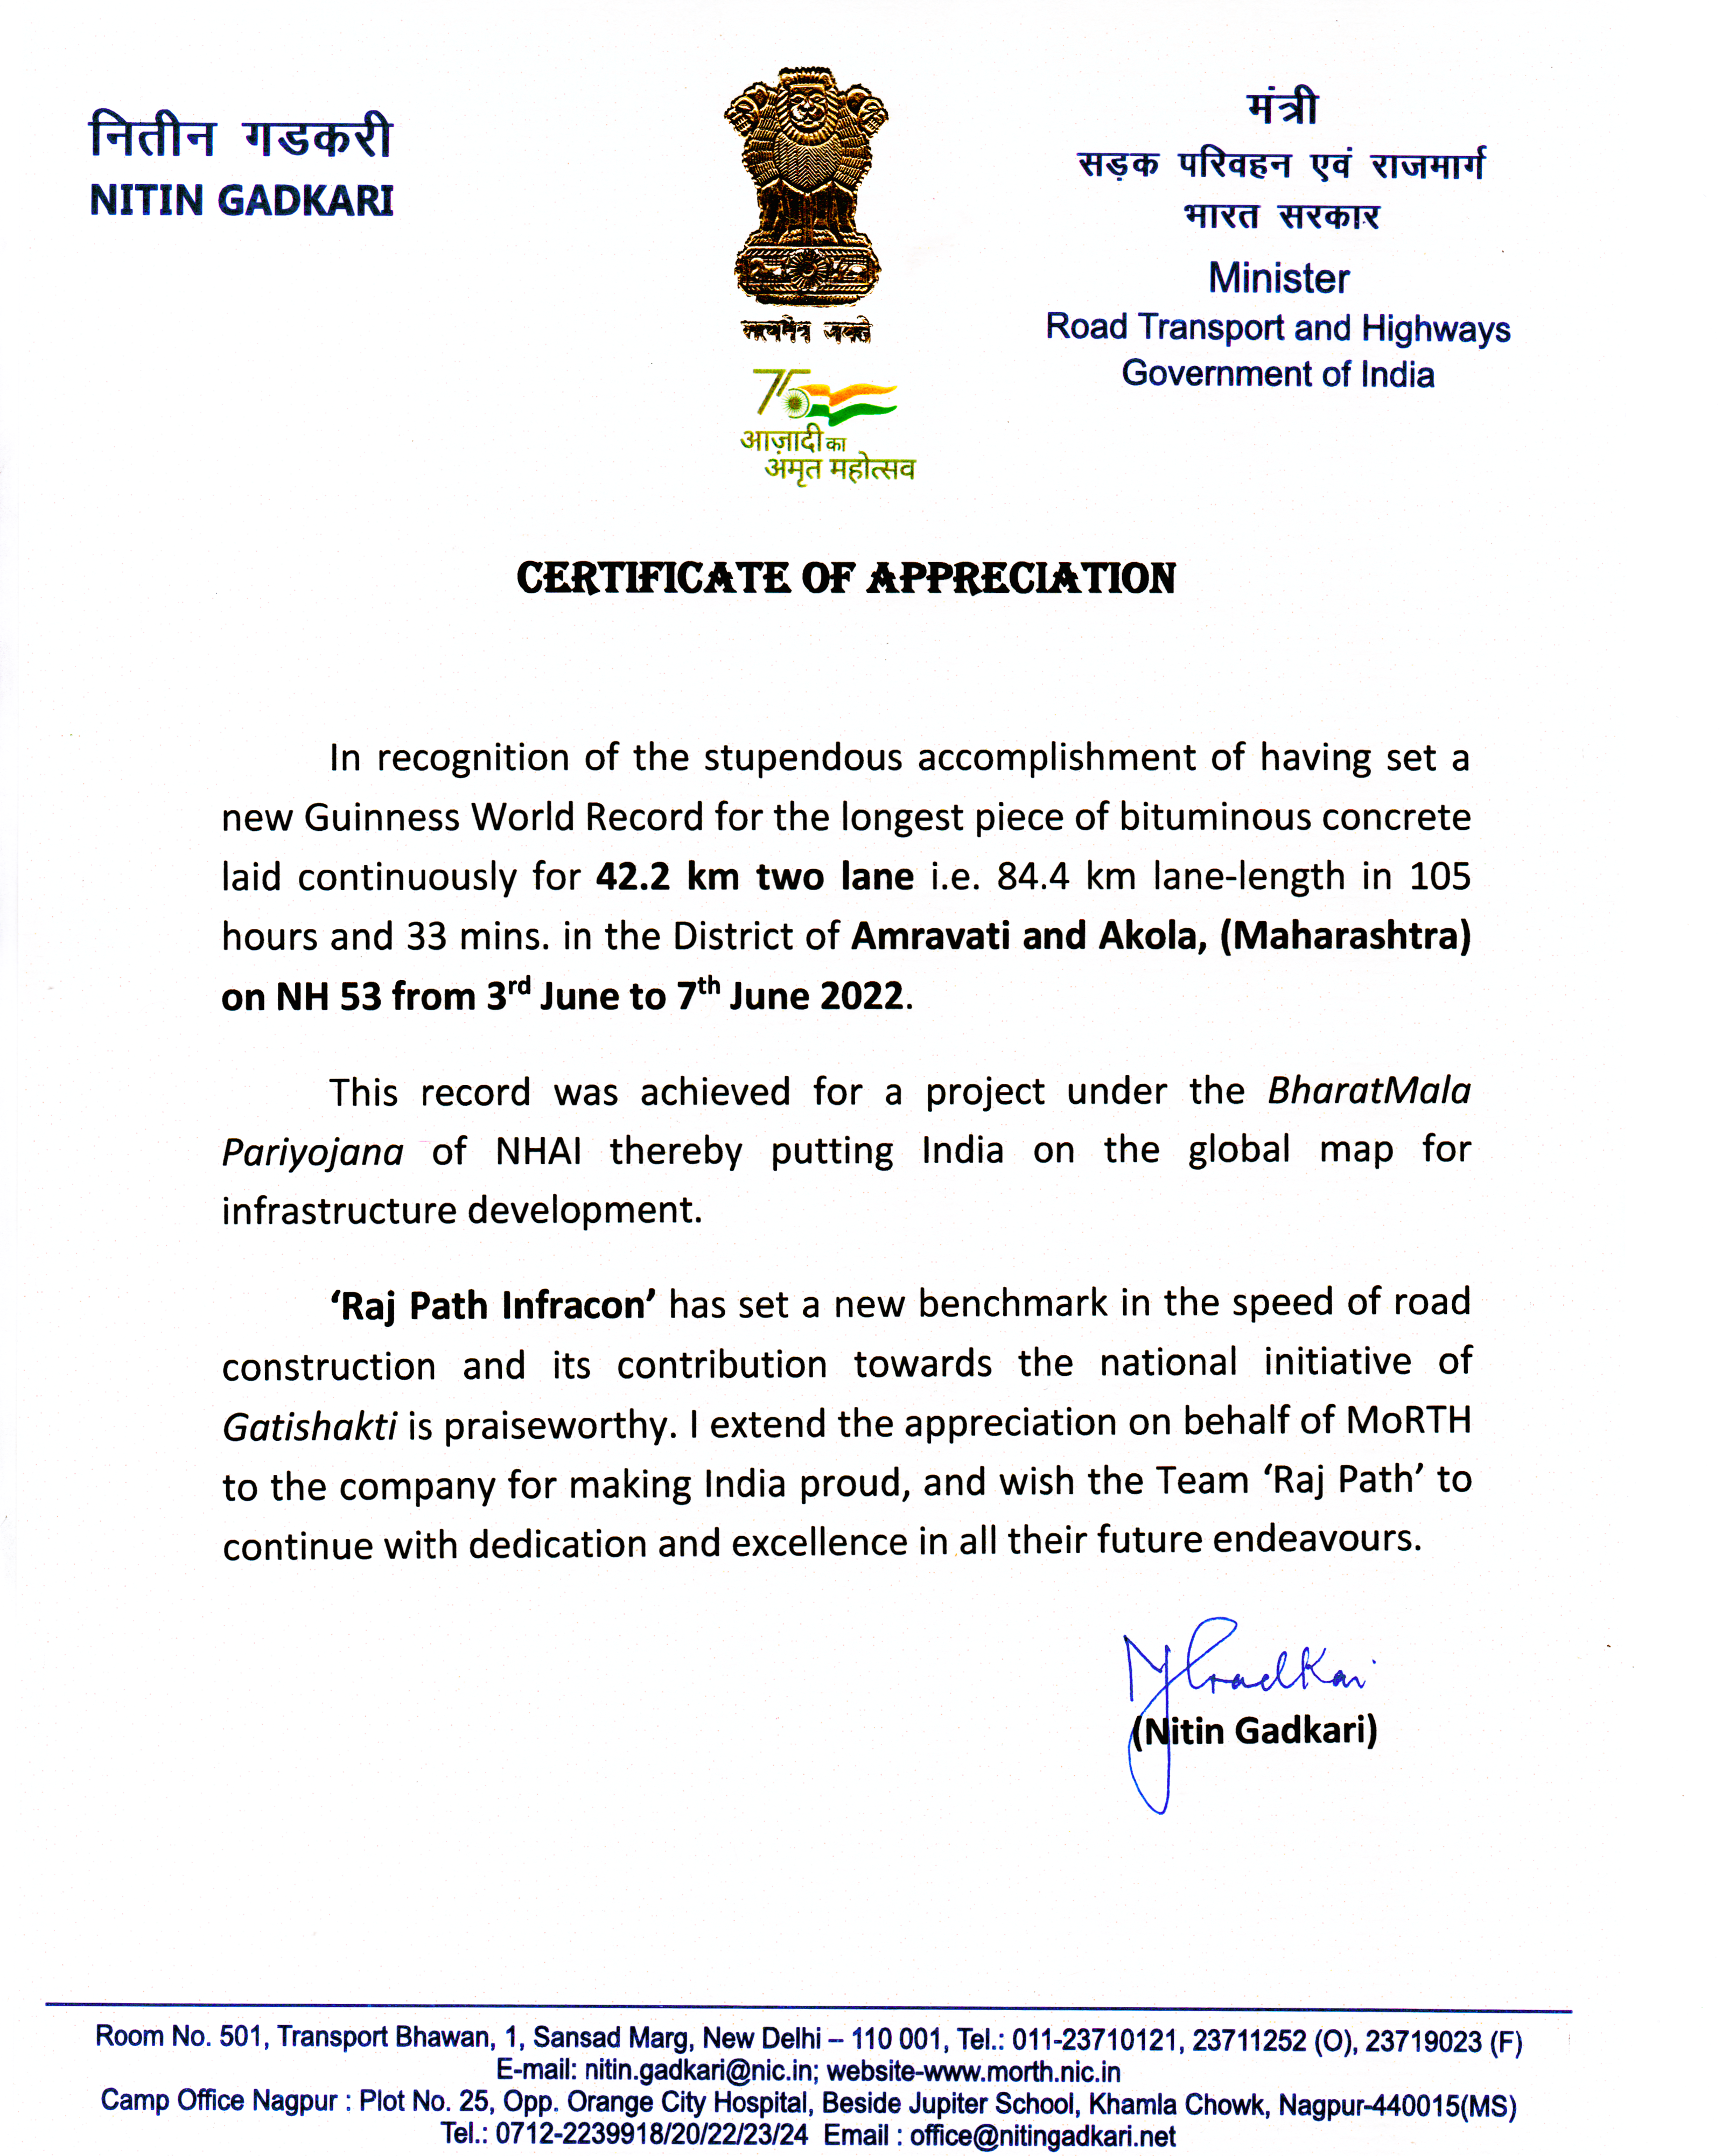 Nitin gadkari certificate